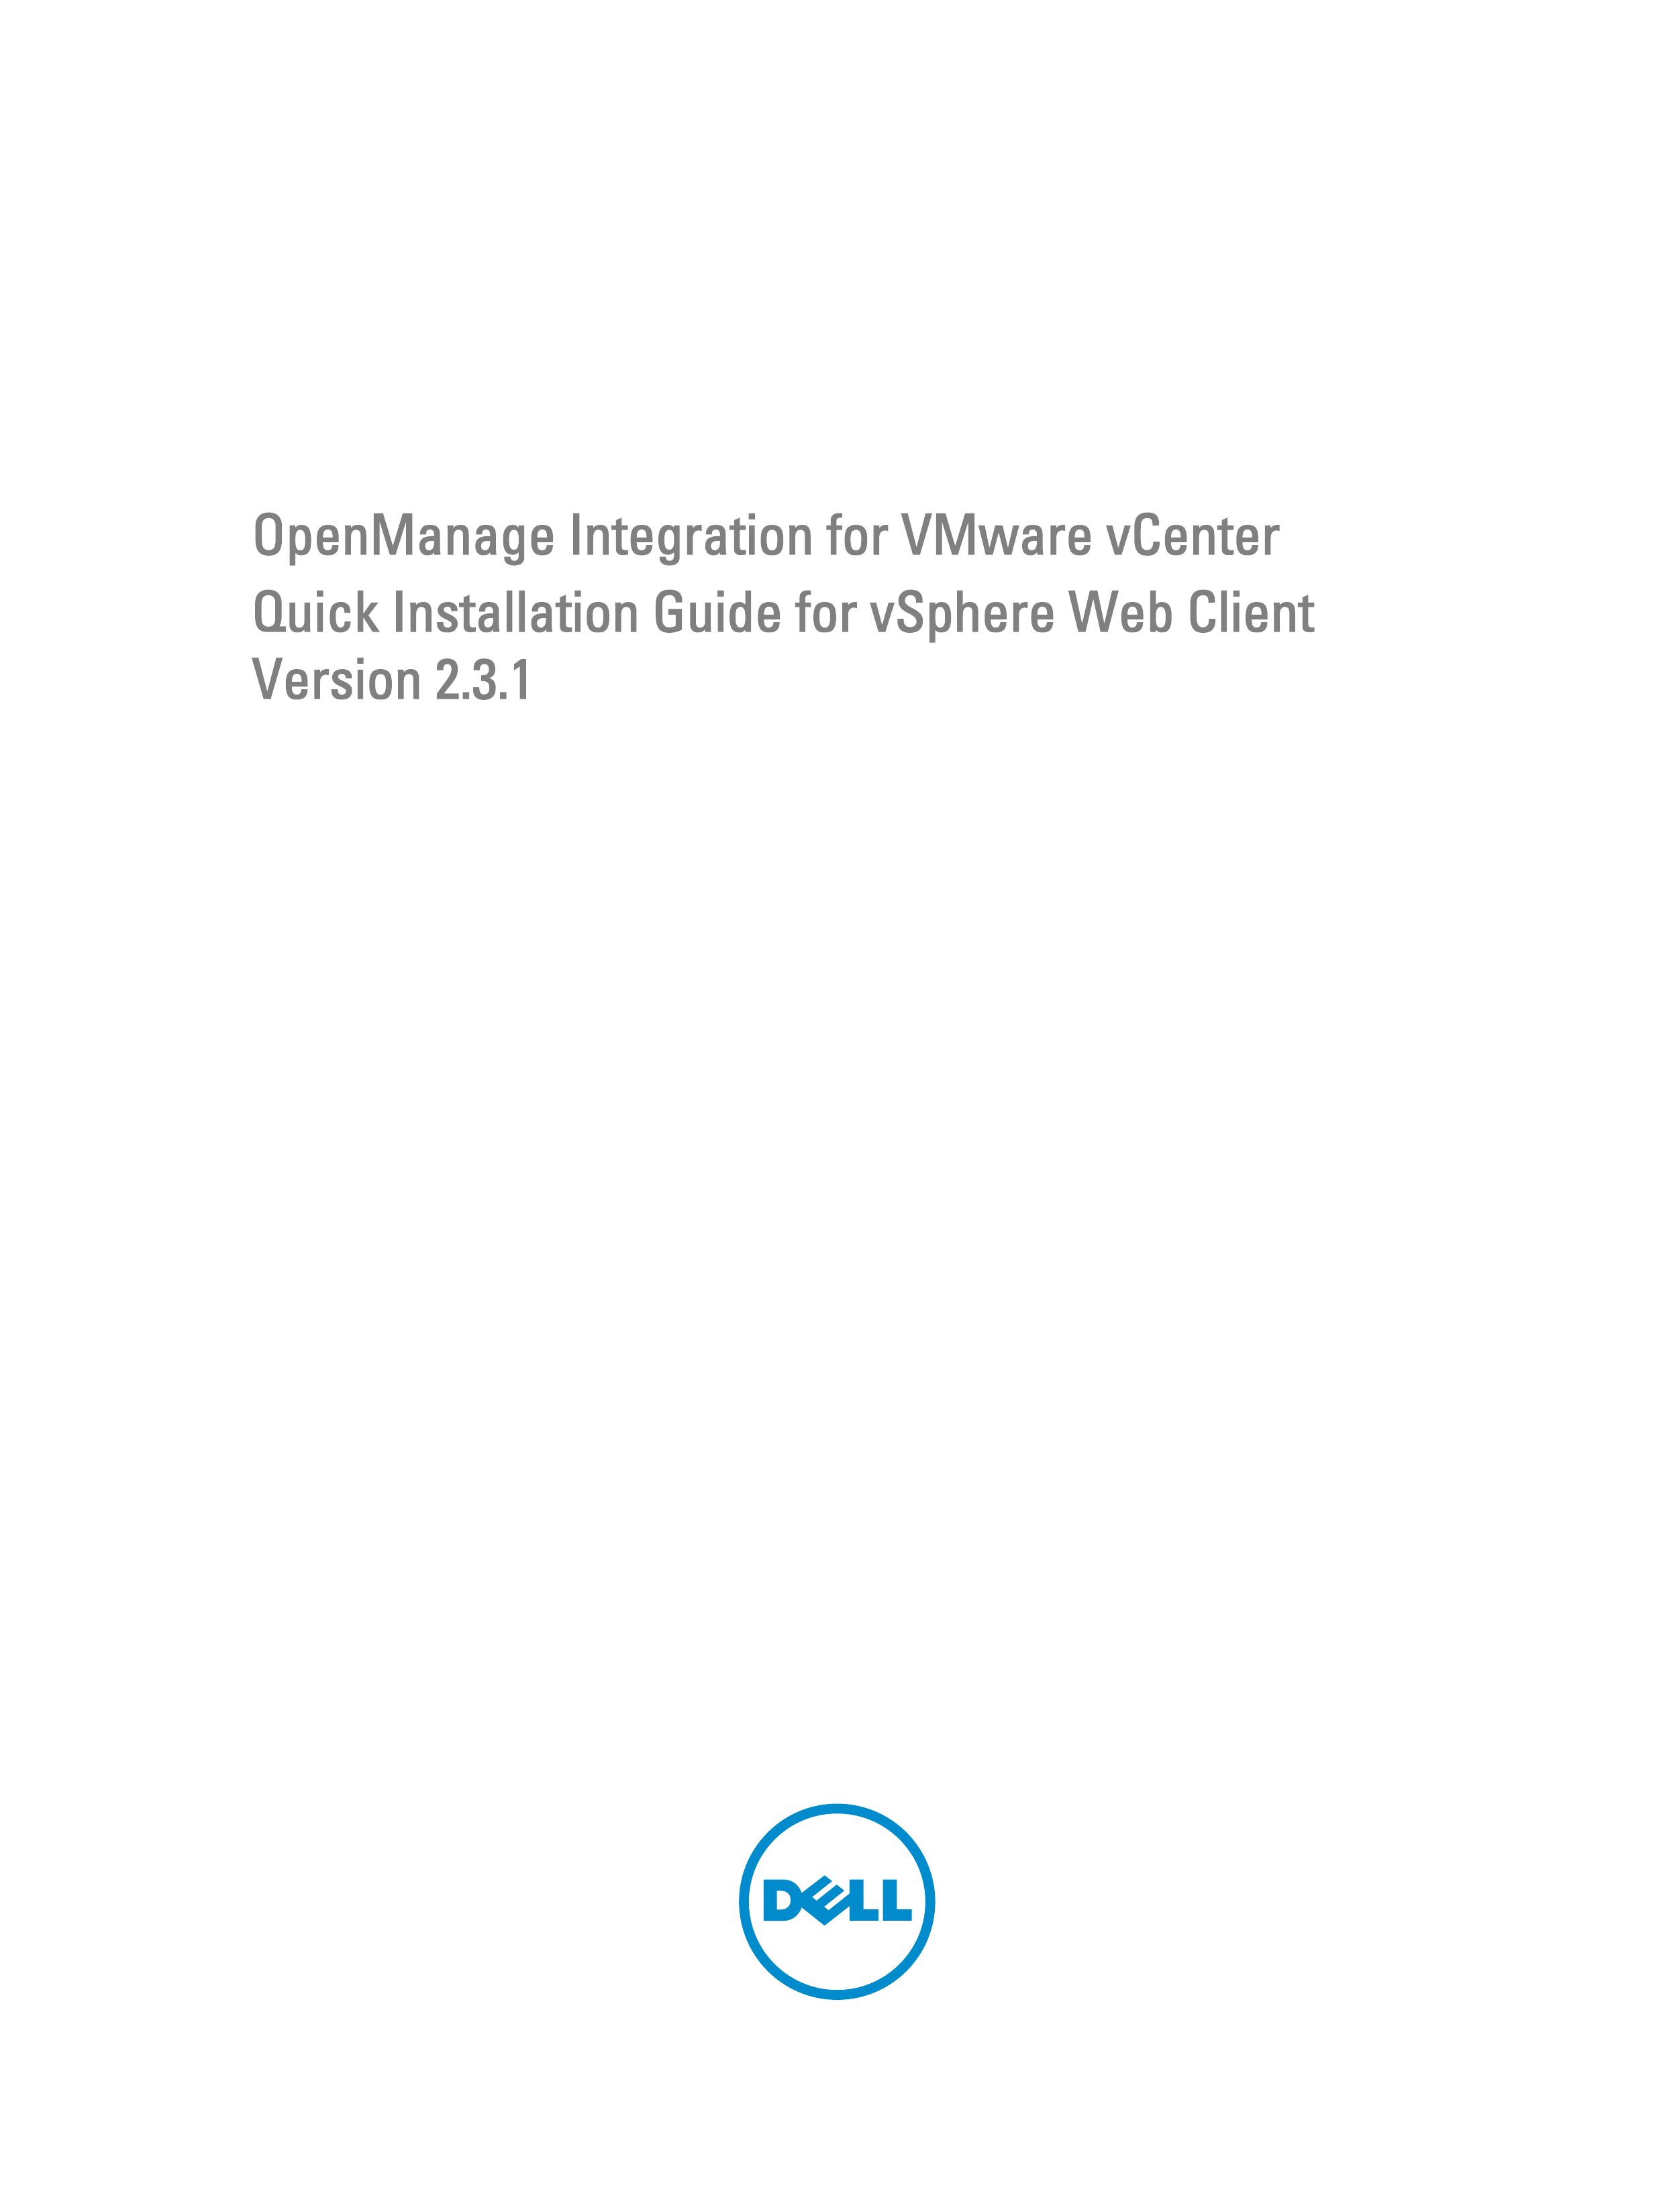 Dell version 2.3.1 Sleep Apnea Machine User Manual